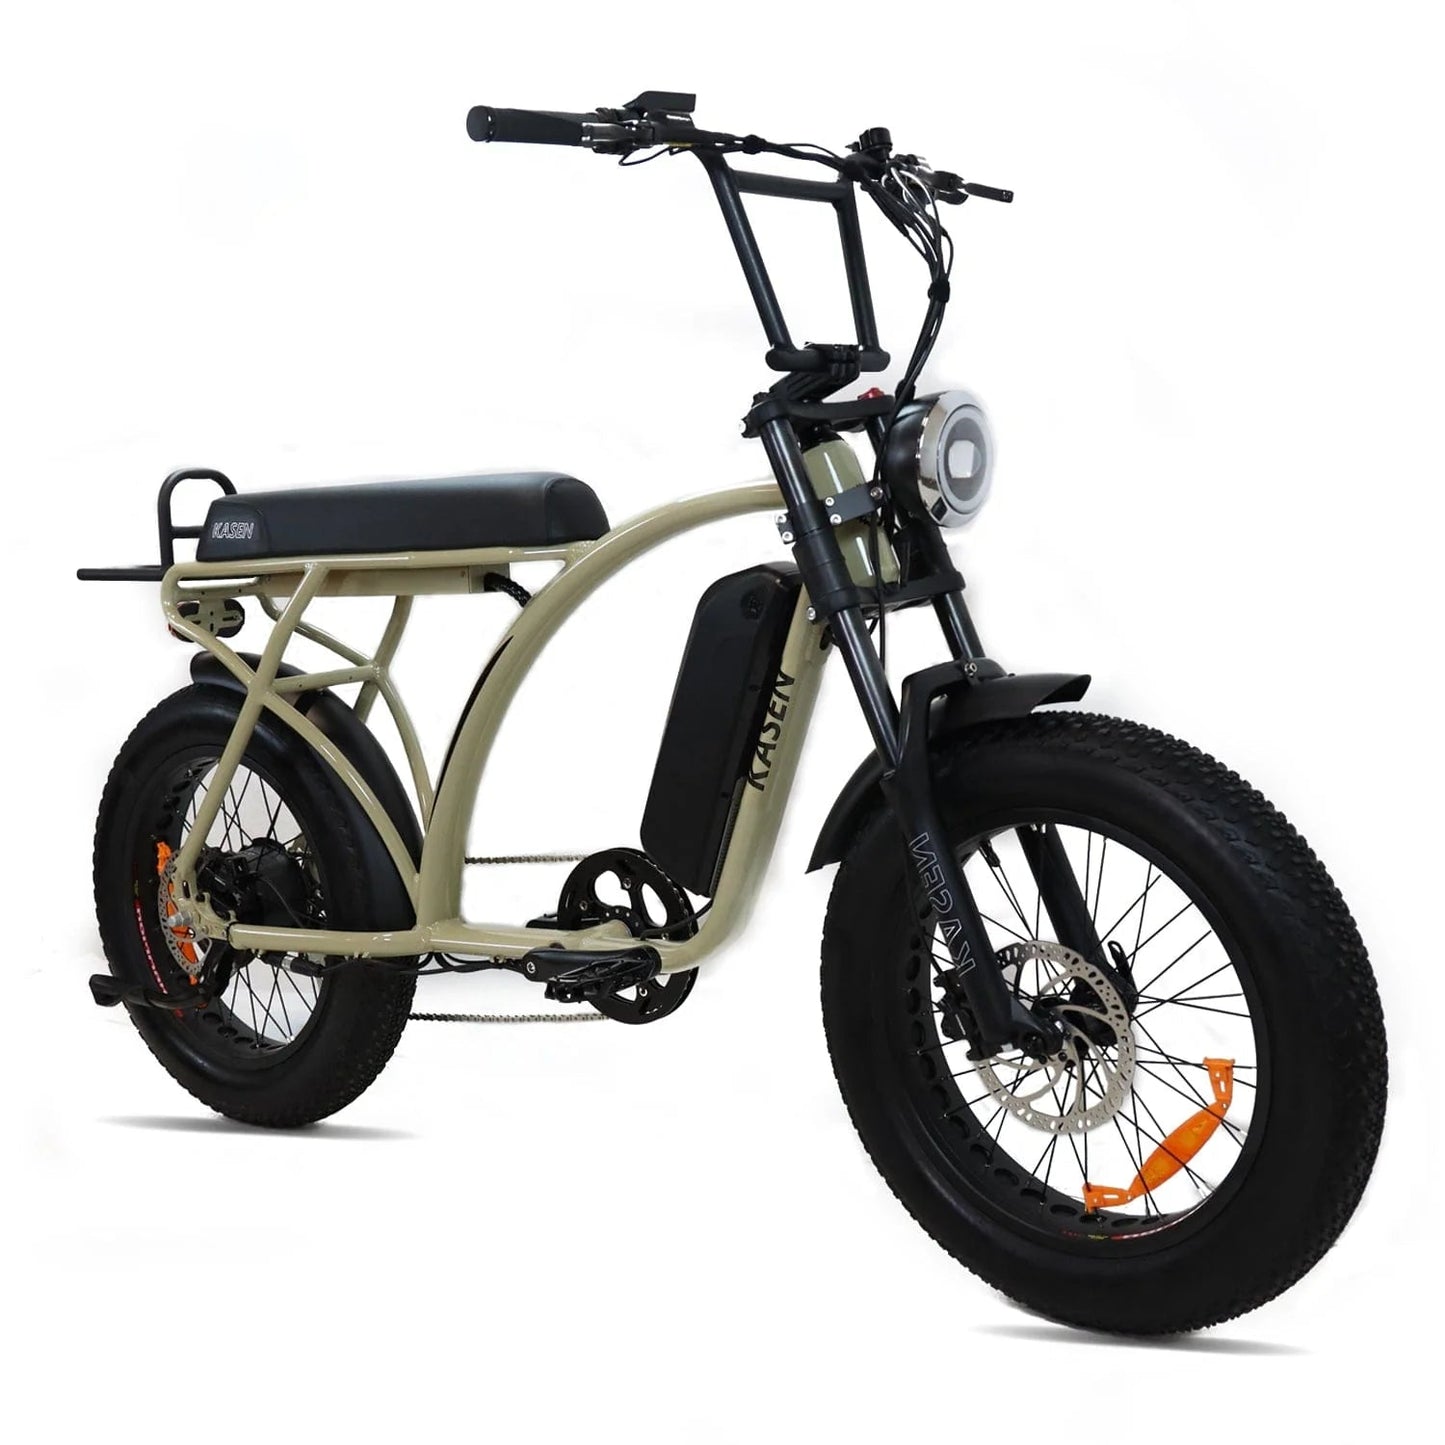 Kasen Kabbit Classic Electric Bike